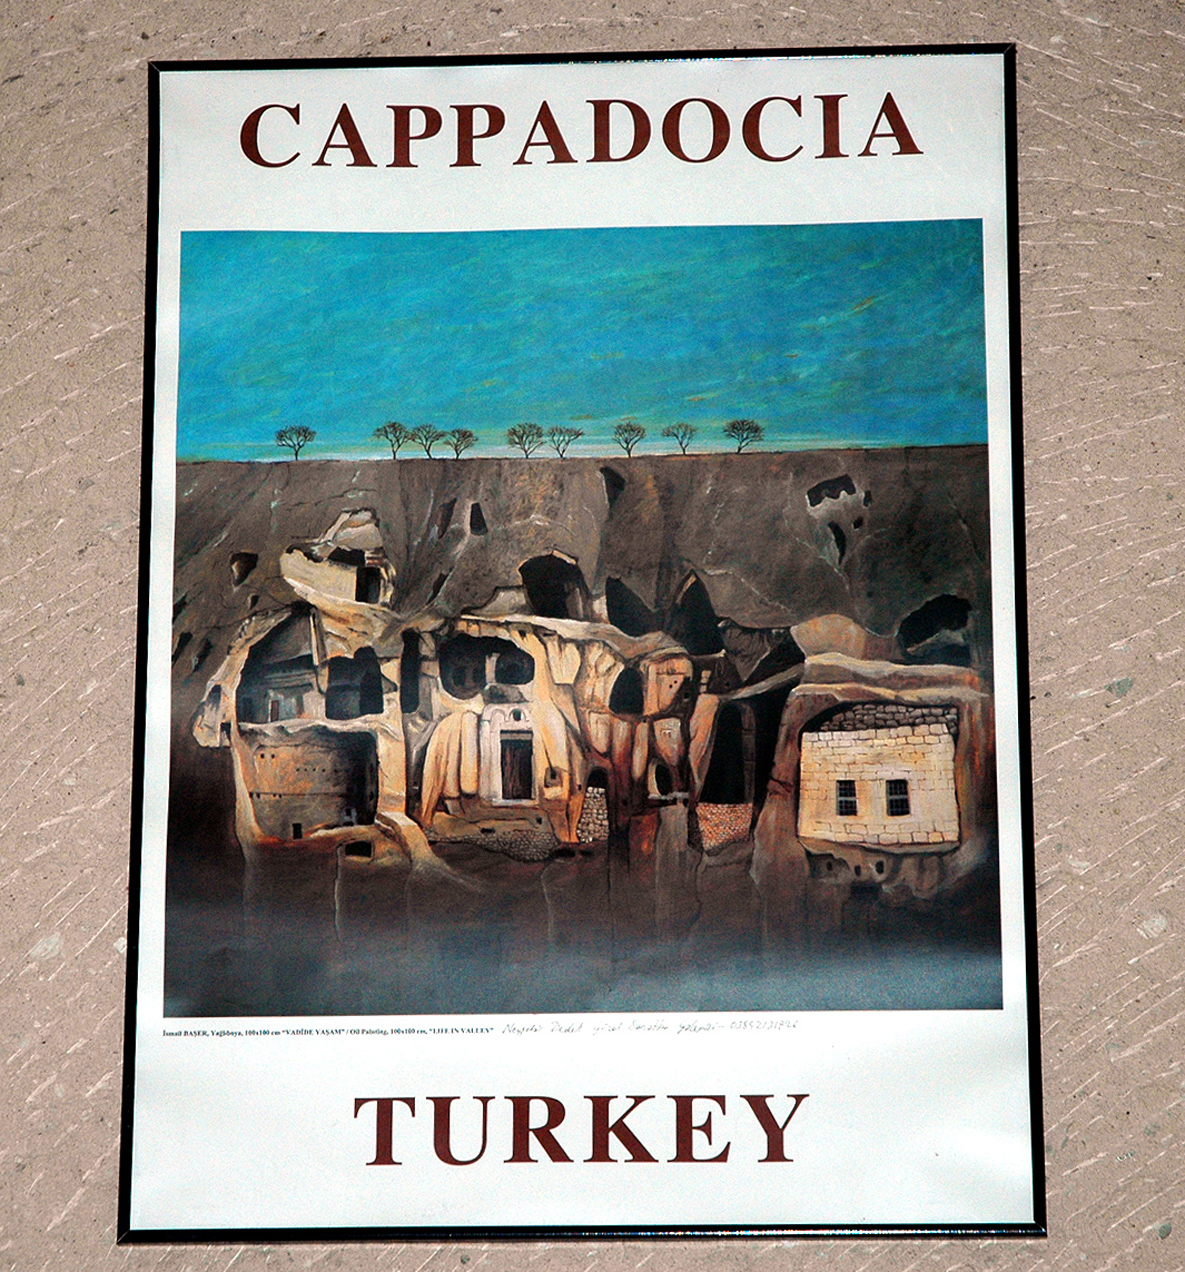 Eclipse 1999 - A30 - Title - Cappadocia